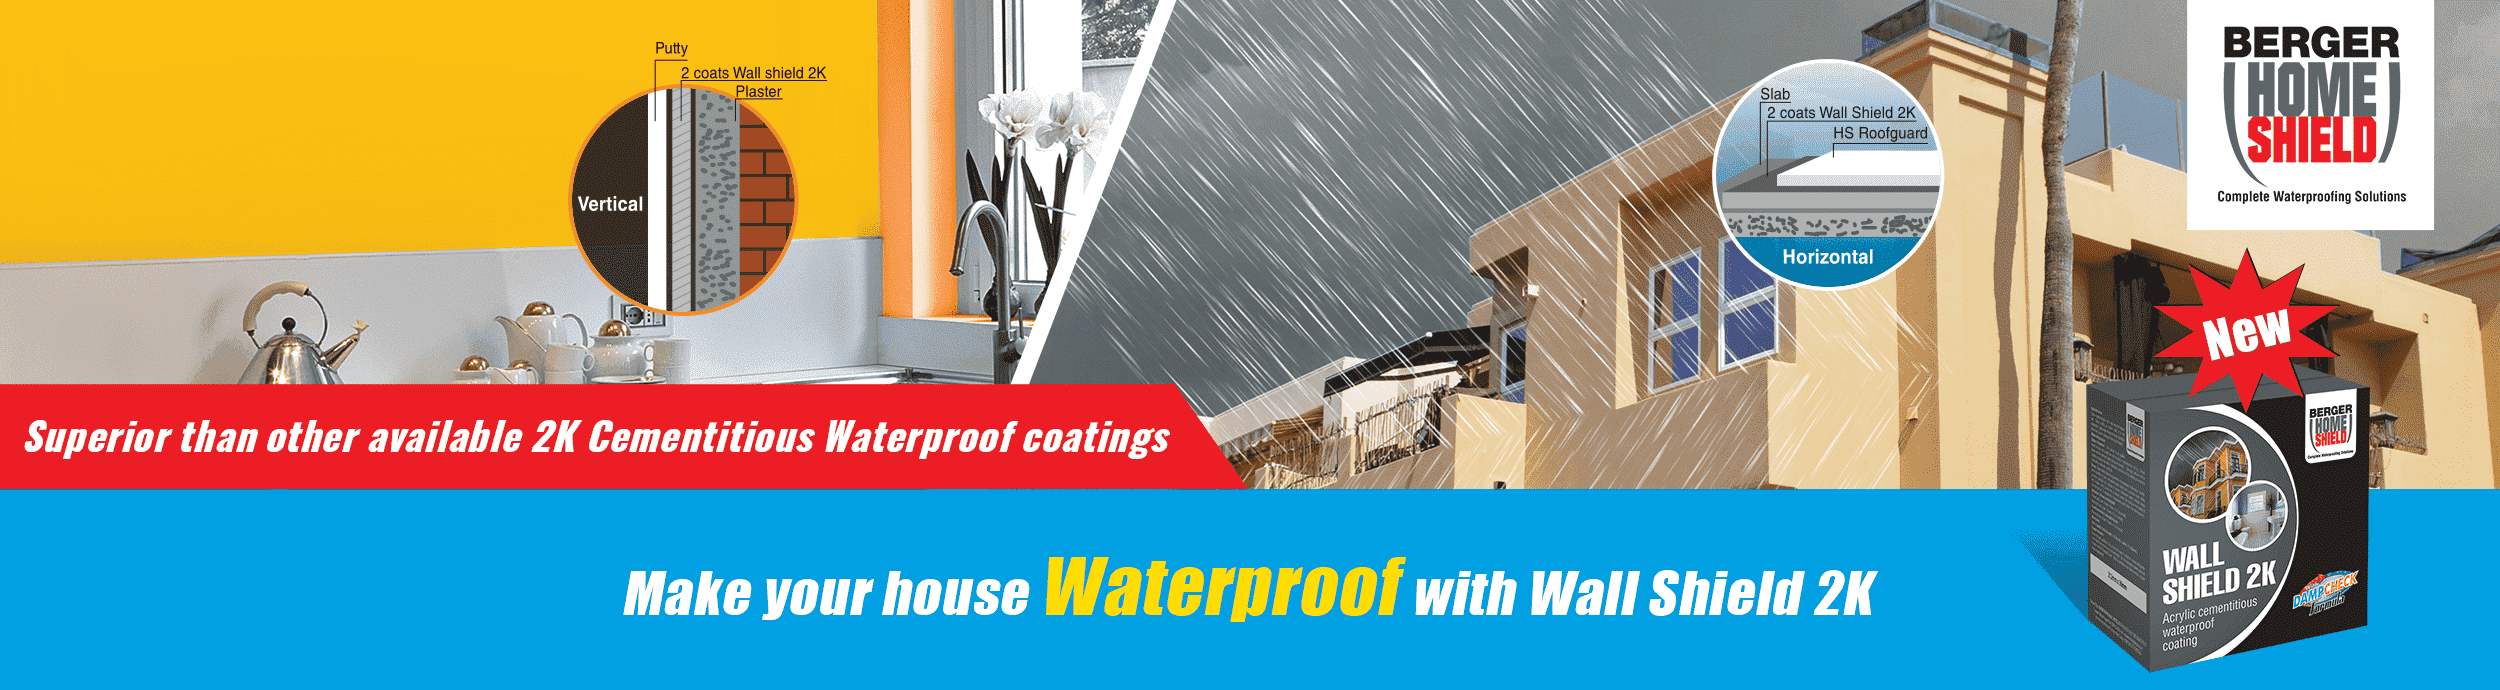 Waterproof coating for walls berger paints walls shield 2k